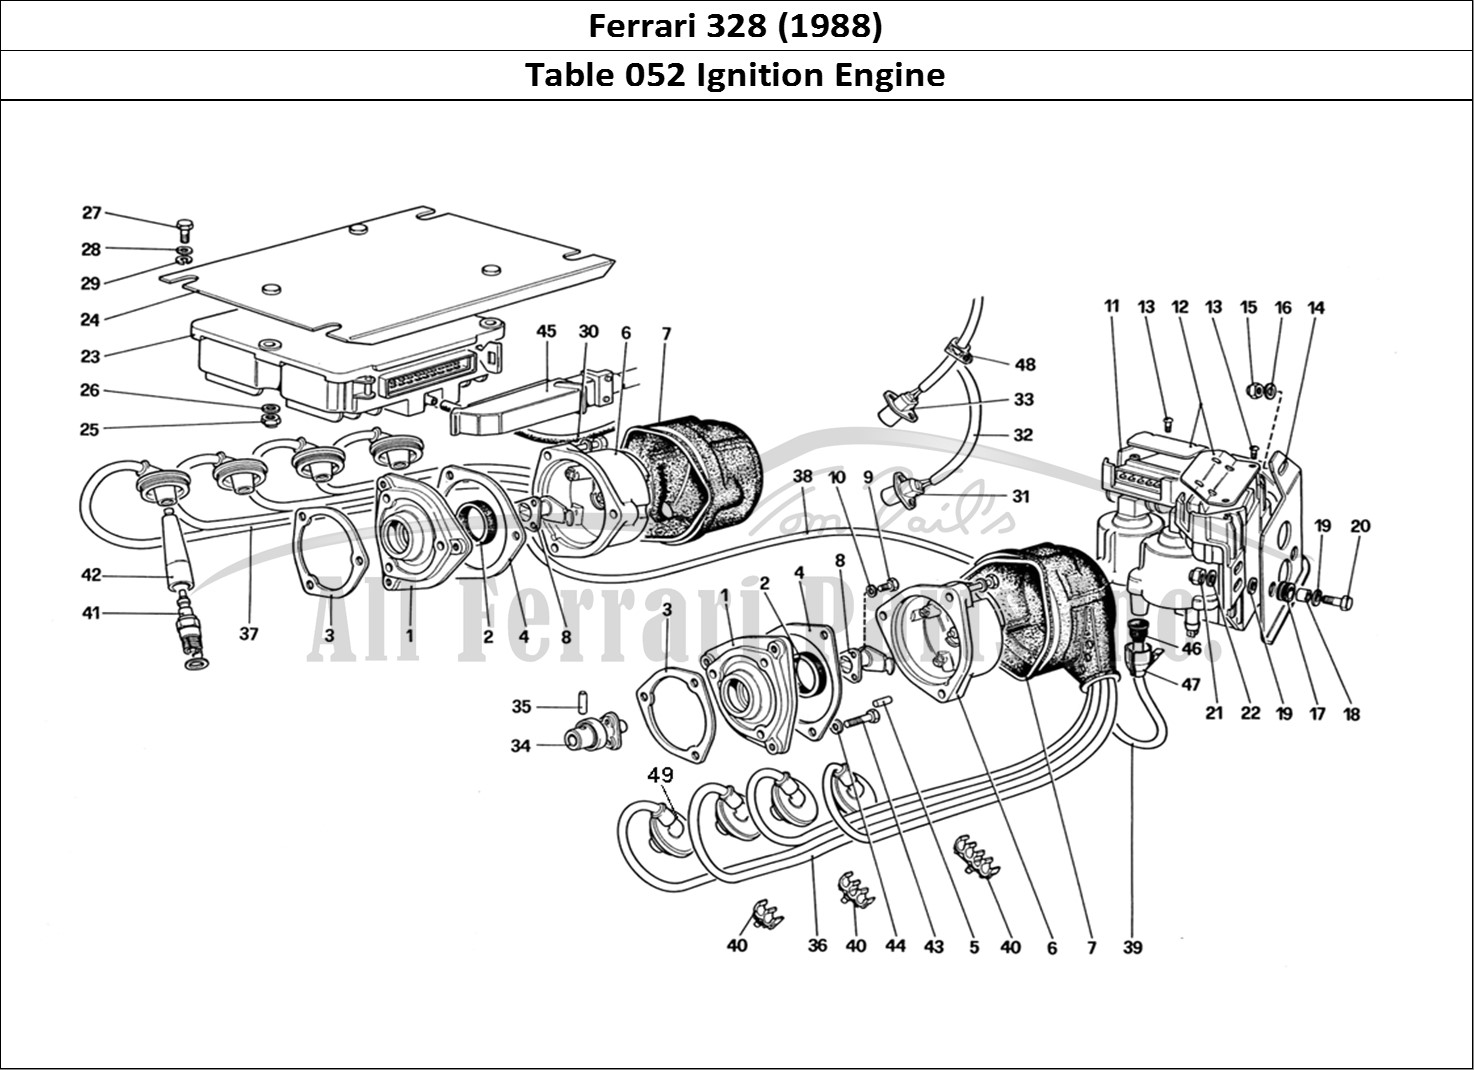 Ferrari Parts Ferrari 328 (1988) Page 052 Engine Ignition